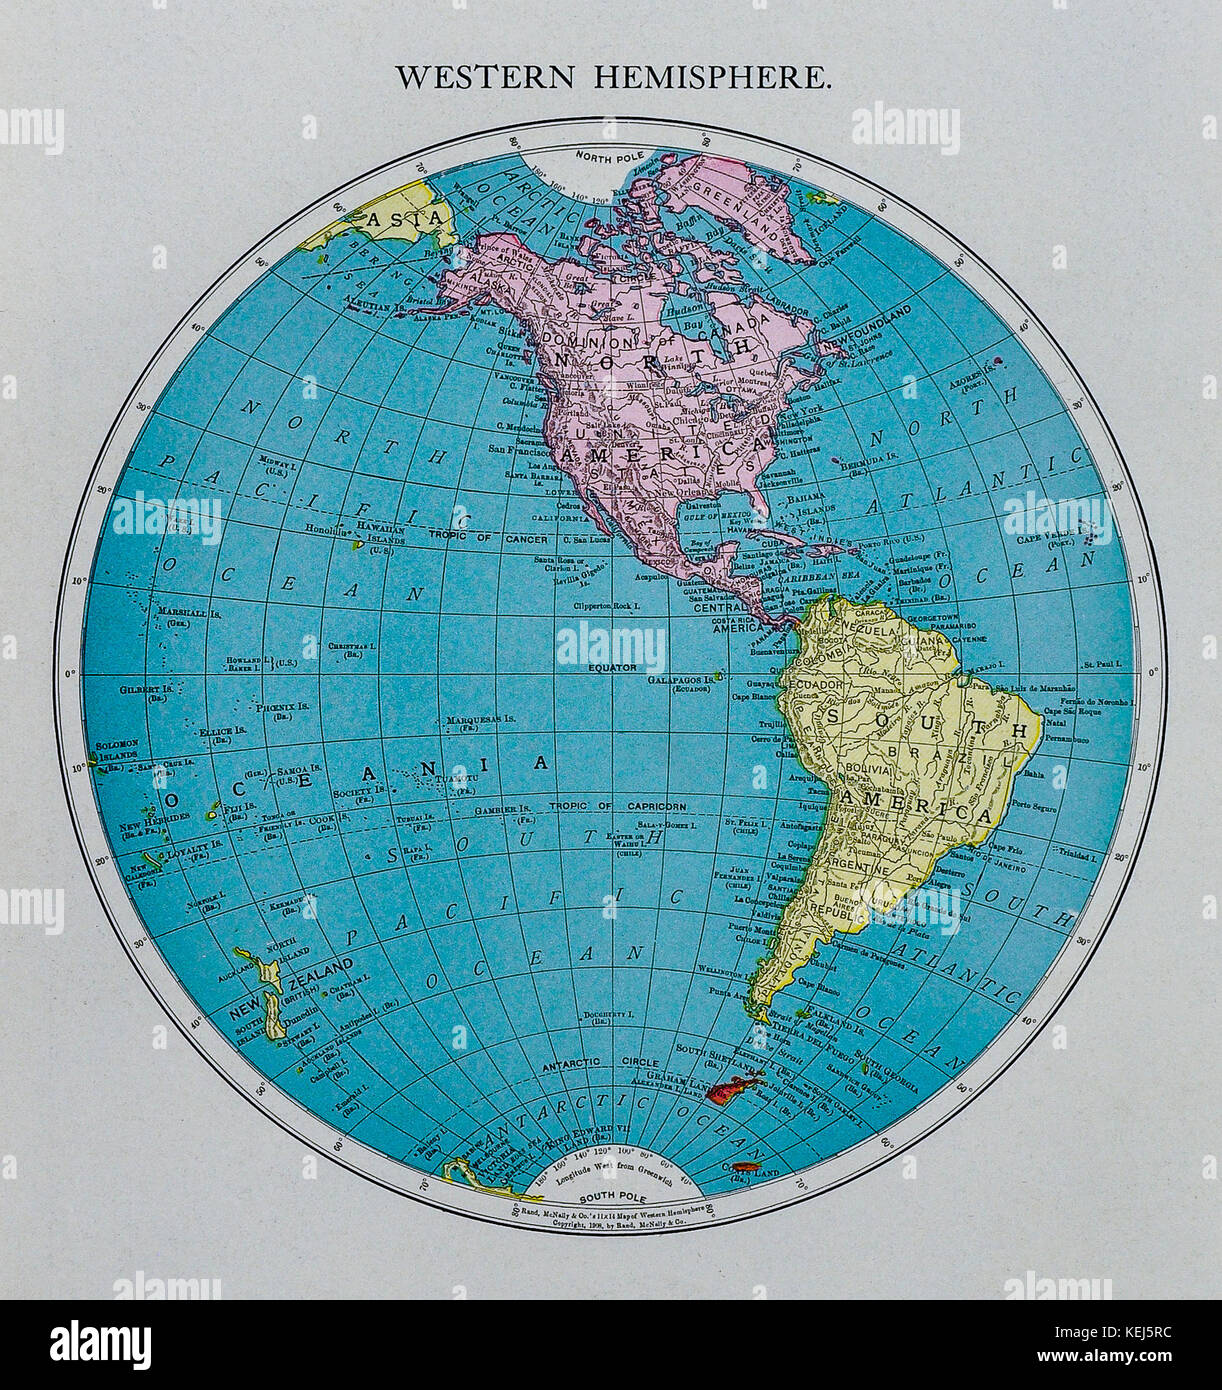 McNally Antique World Western Hemisphere Map 1911 showing North America